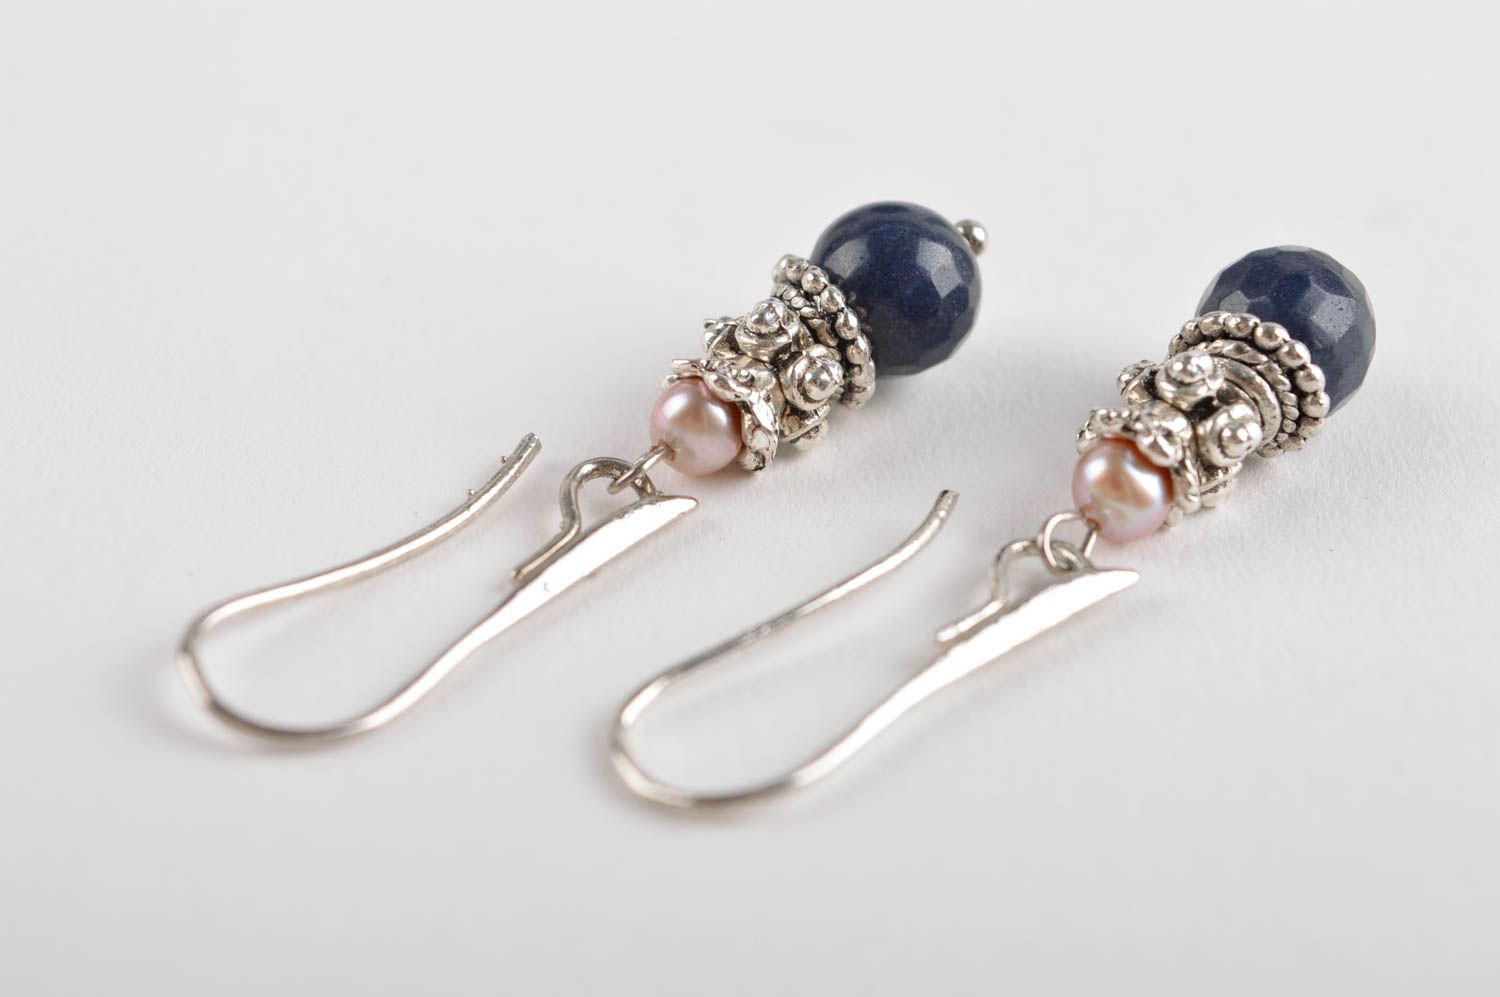 Handmade jewelry stone earrings dangling earrings women accessories gift for her photo 5